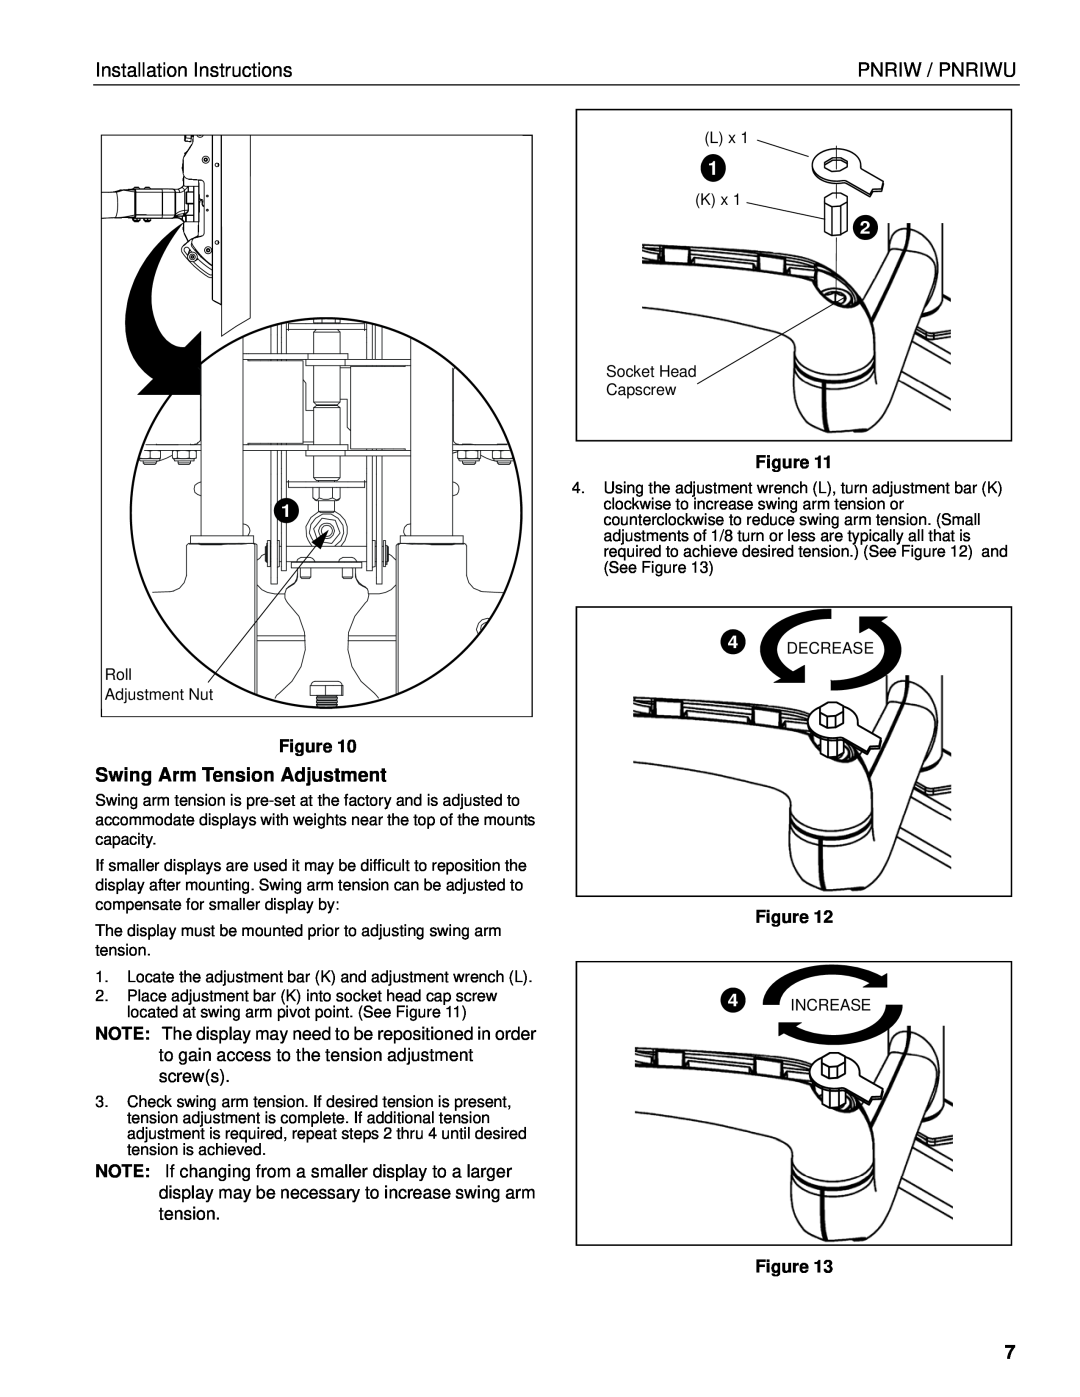 Chief Manufacturing PNRIWU Installation Instructions, Pnriw / Pnriwu, Swing Arm Tension Adjustment 